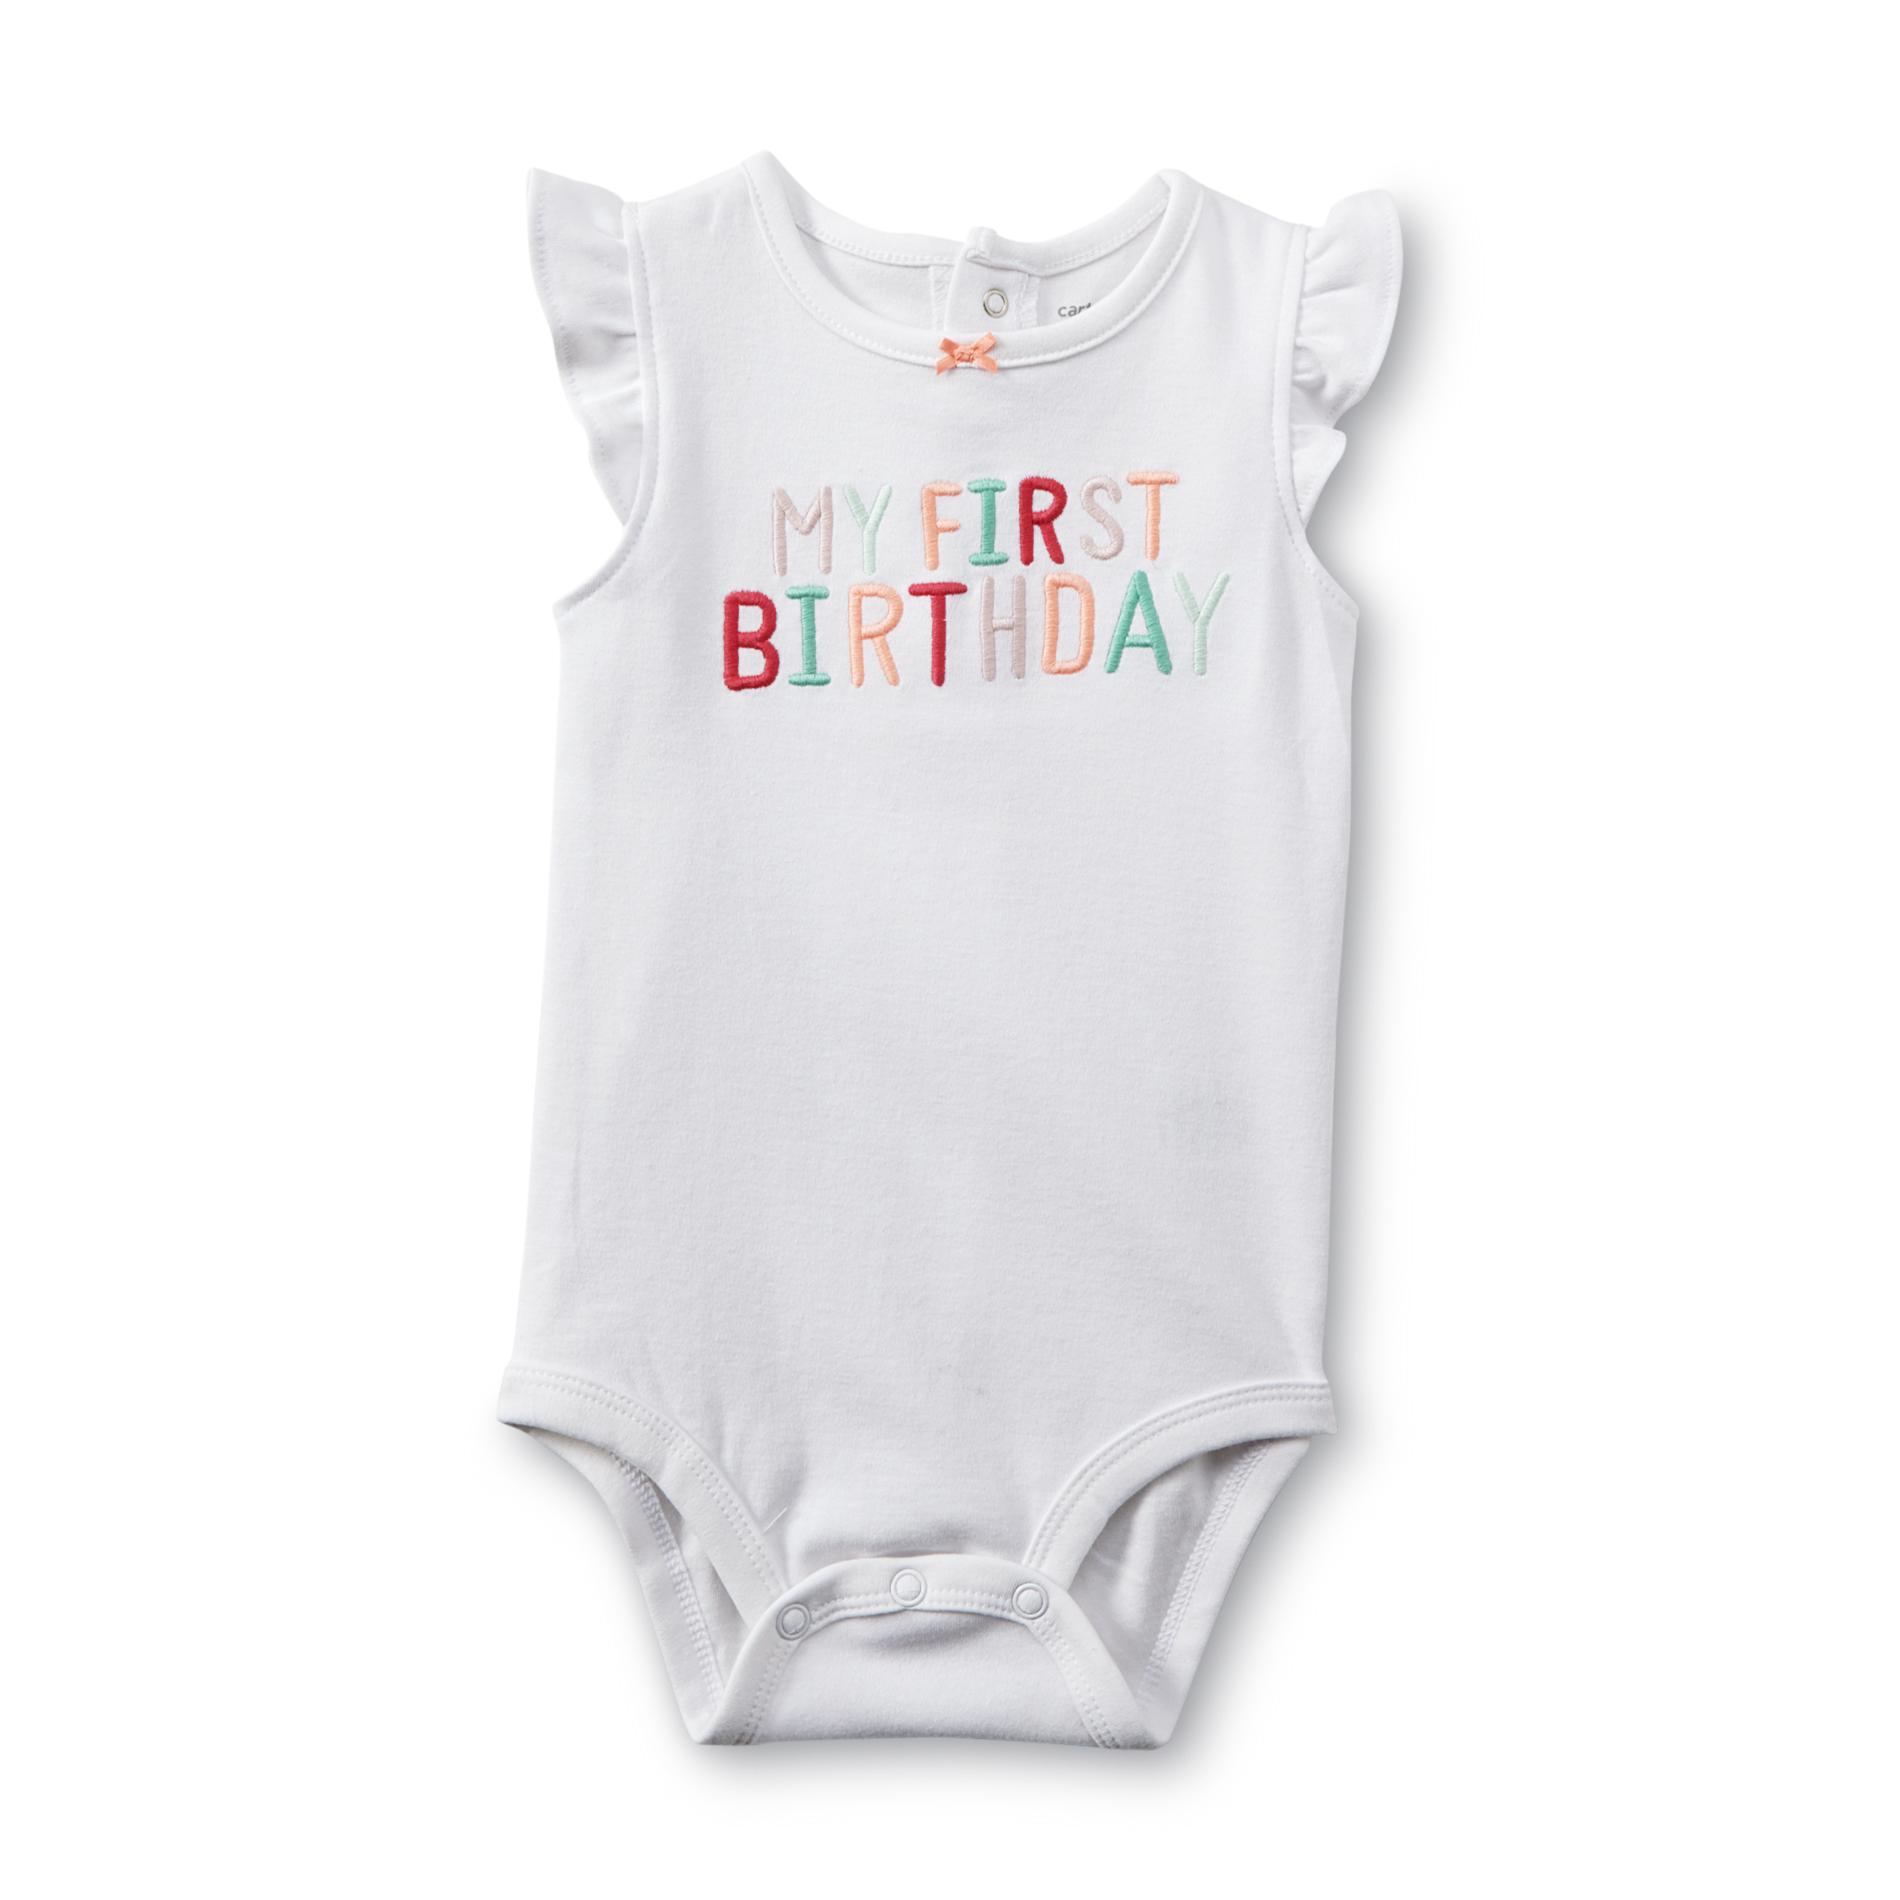 Carter's Newborn & Infant Girl's Bodysuit - First Birthday